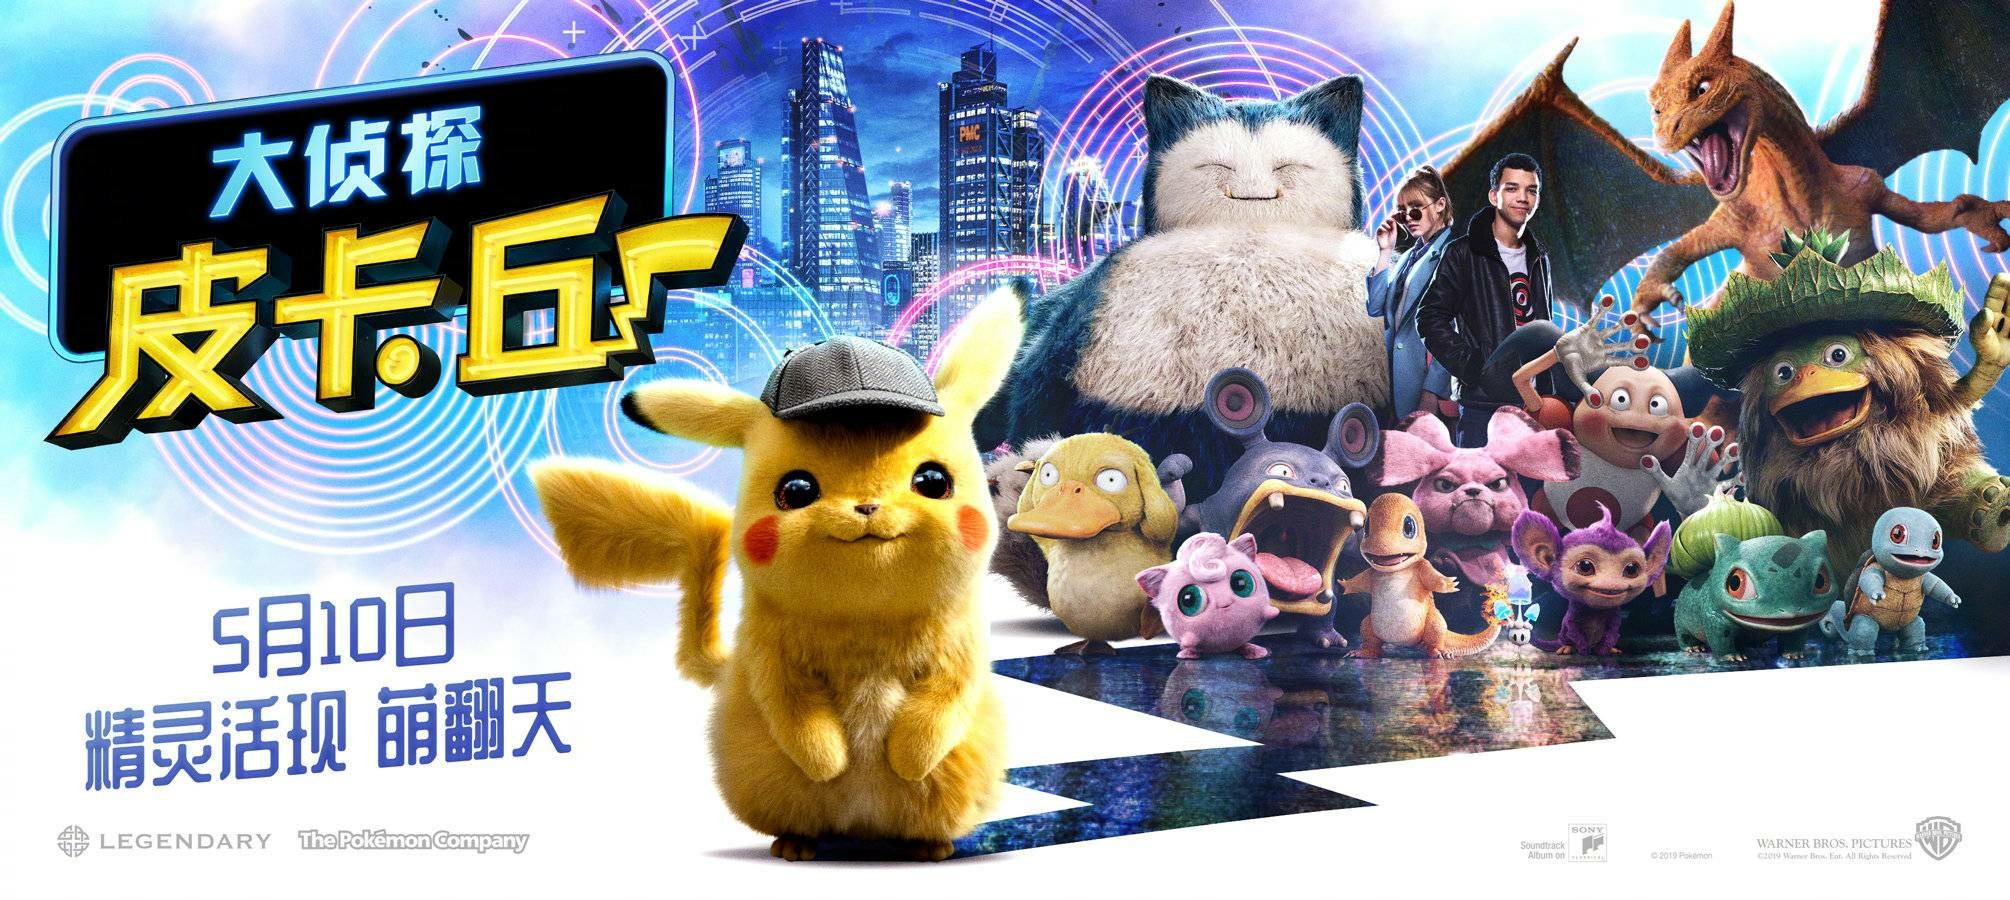 Mega Sized Movie Poster Image for Pokémon Detective Pikachu (#5 of 26)